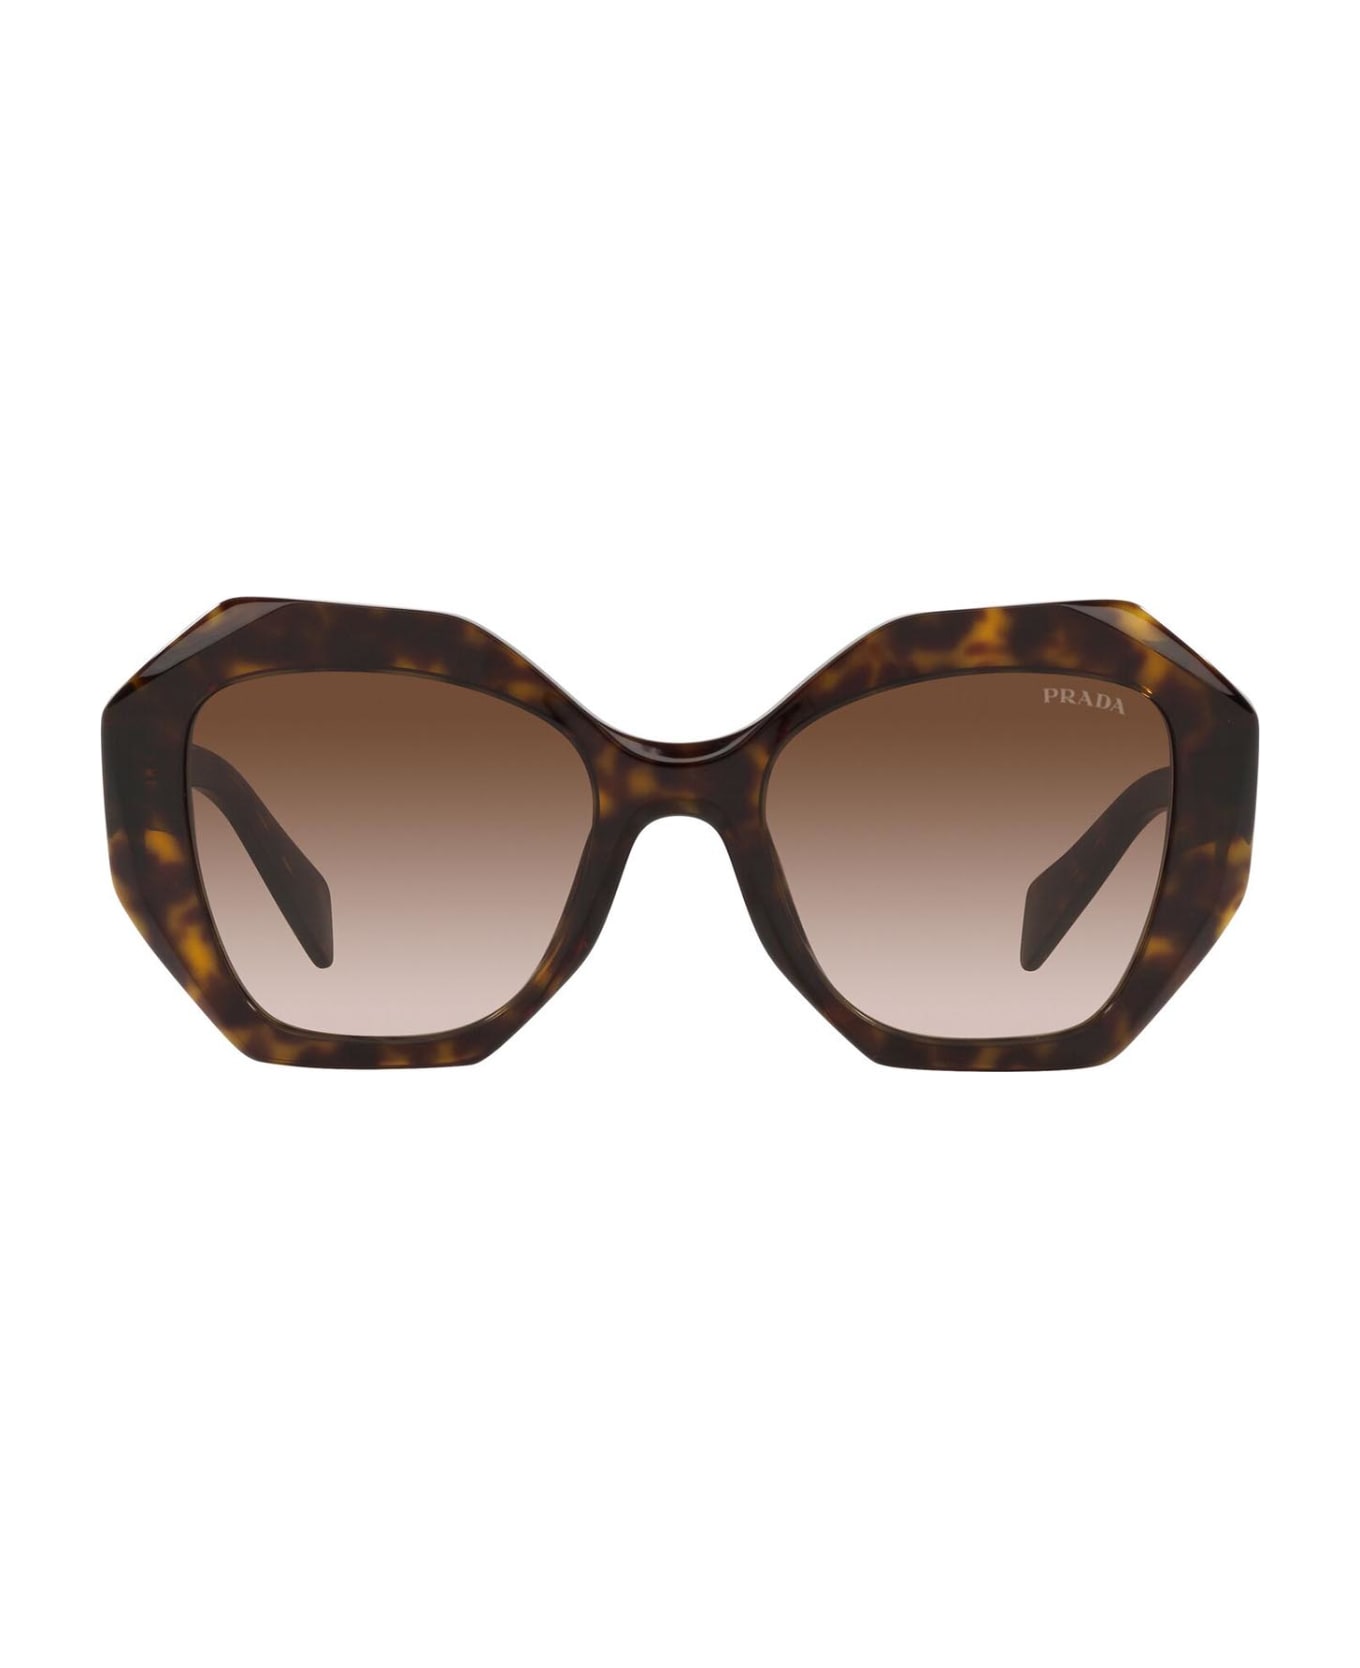 Prada Eyewear Pr 16ws Tortoise Sunglasses - Tortoise